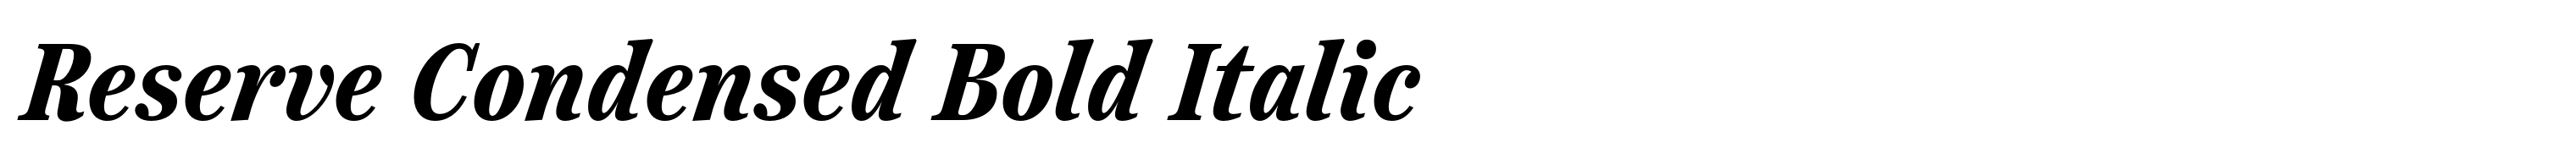 Reserve Condensed Bold Italic